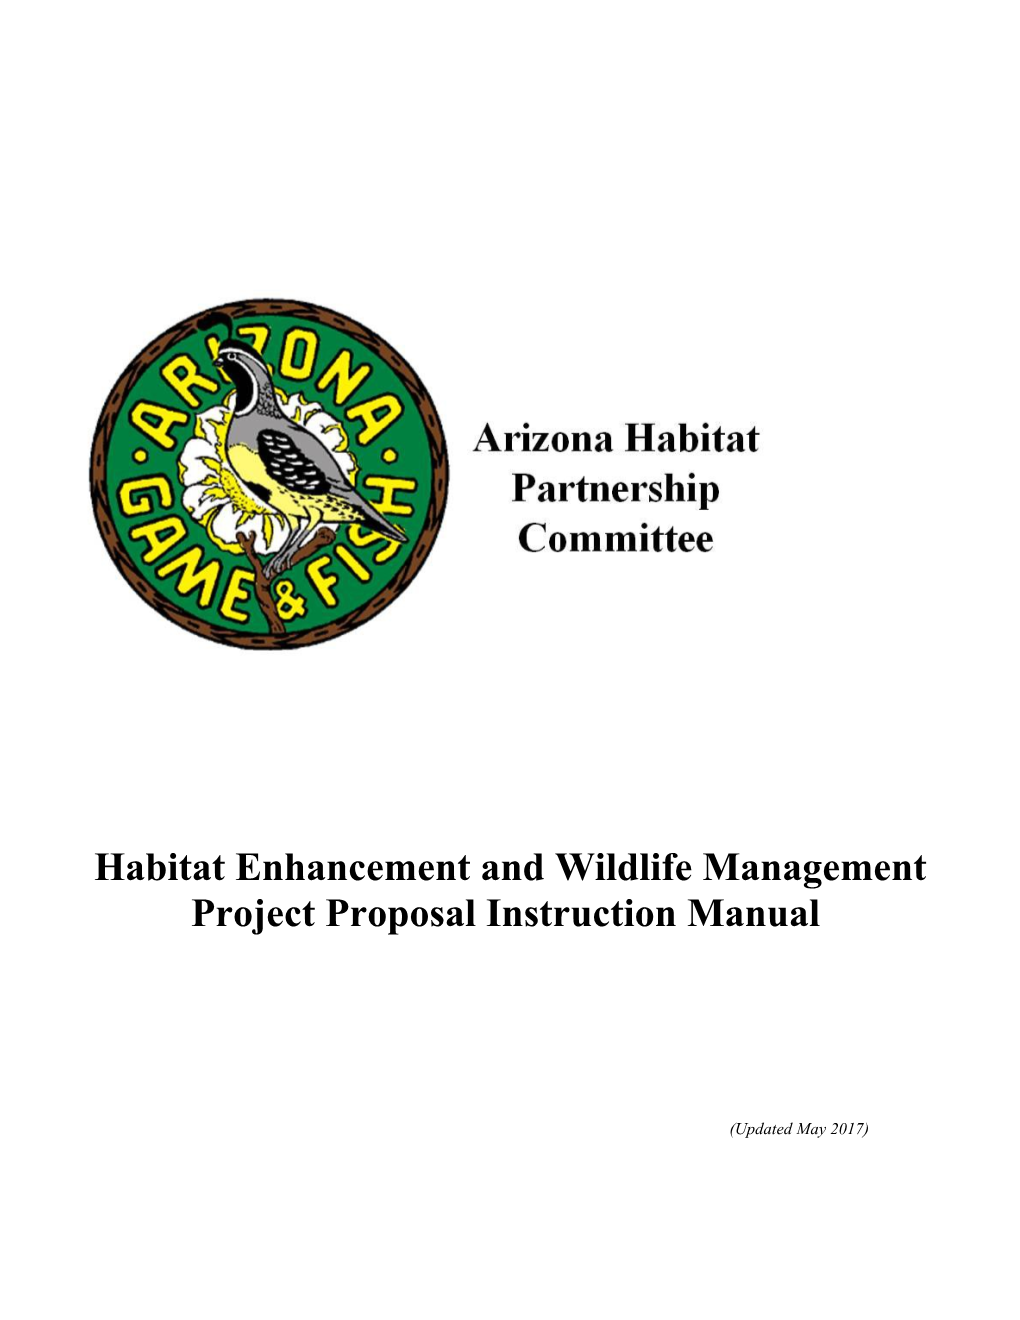 Instructions for Completing Habitat Partnership Program Habitat s1